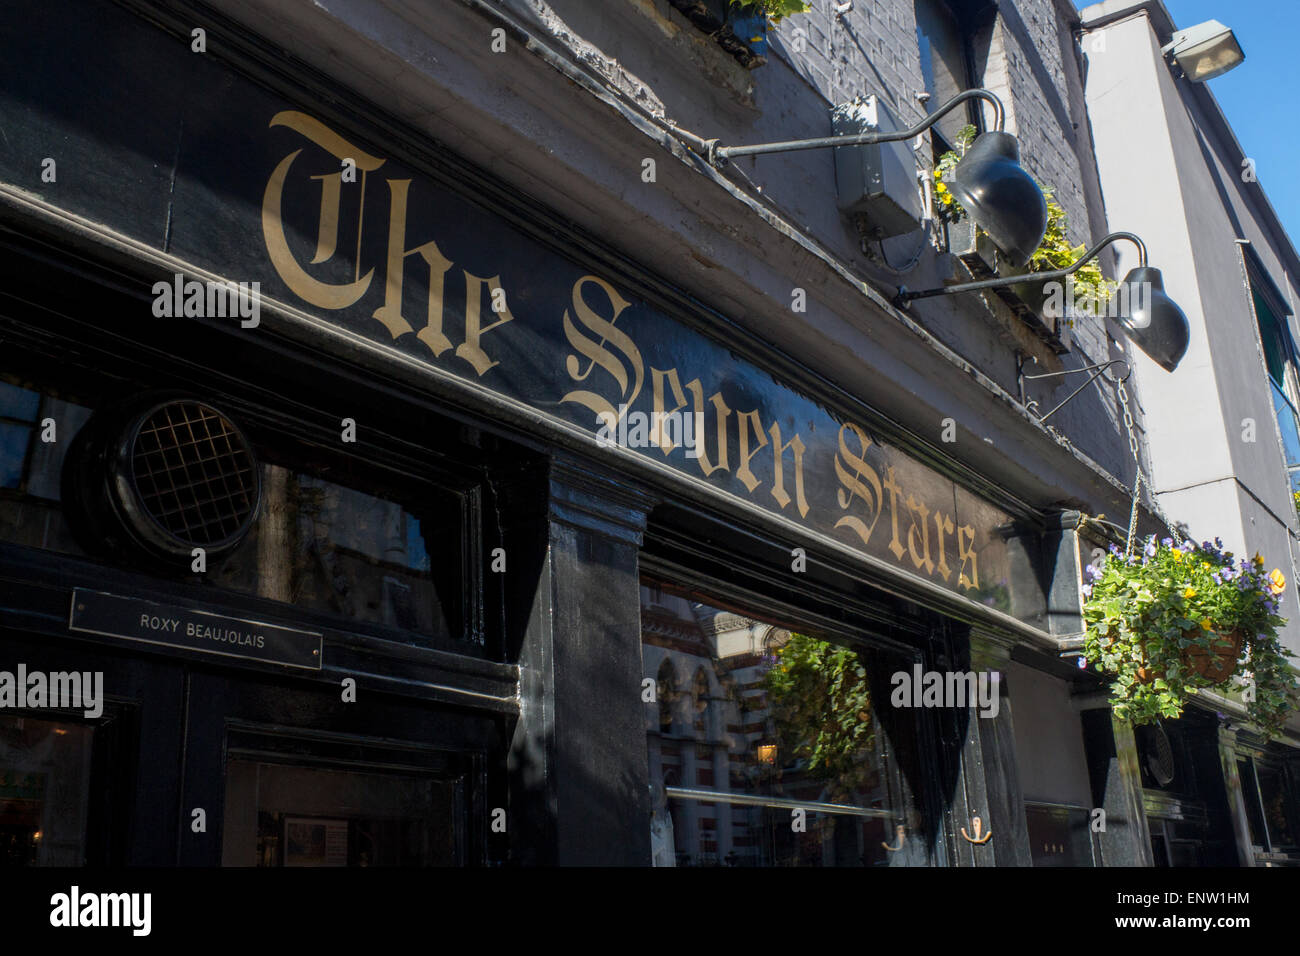 Seven Stars pub exterior and sign Carey Street London England UK Stock Photo